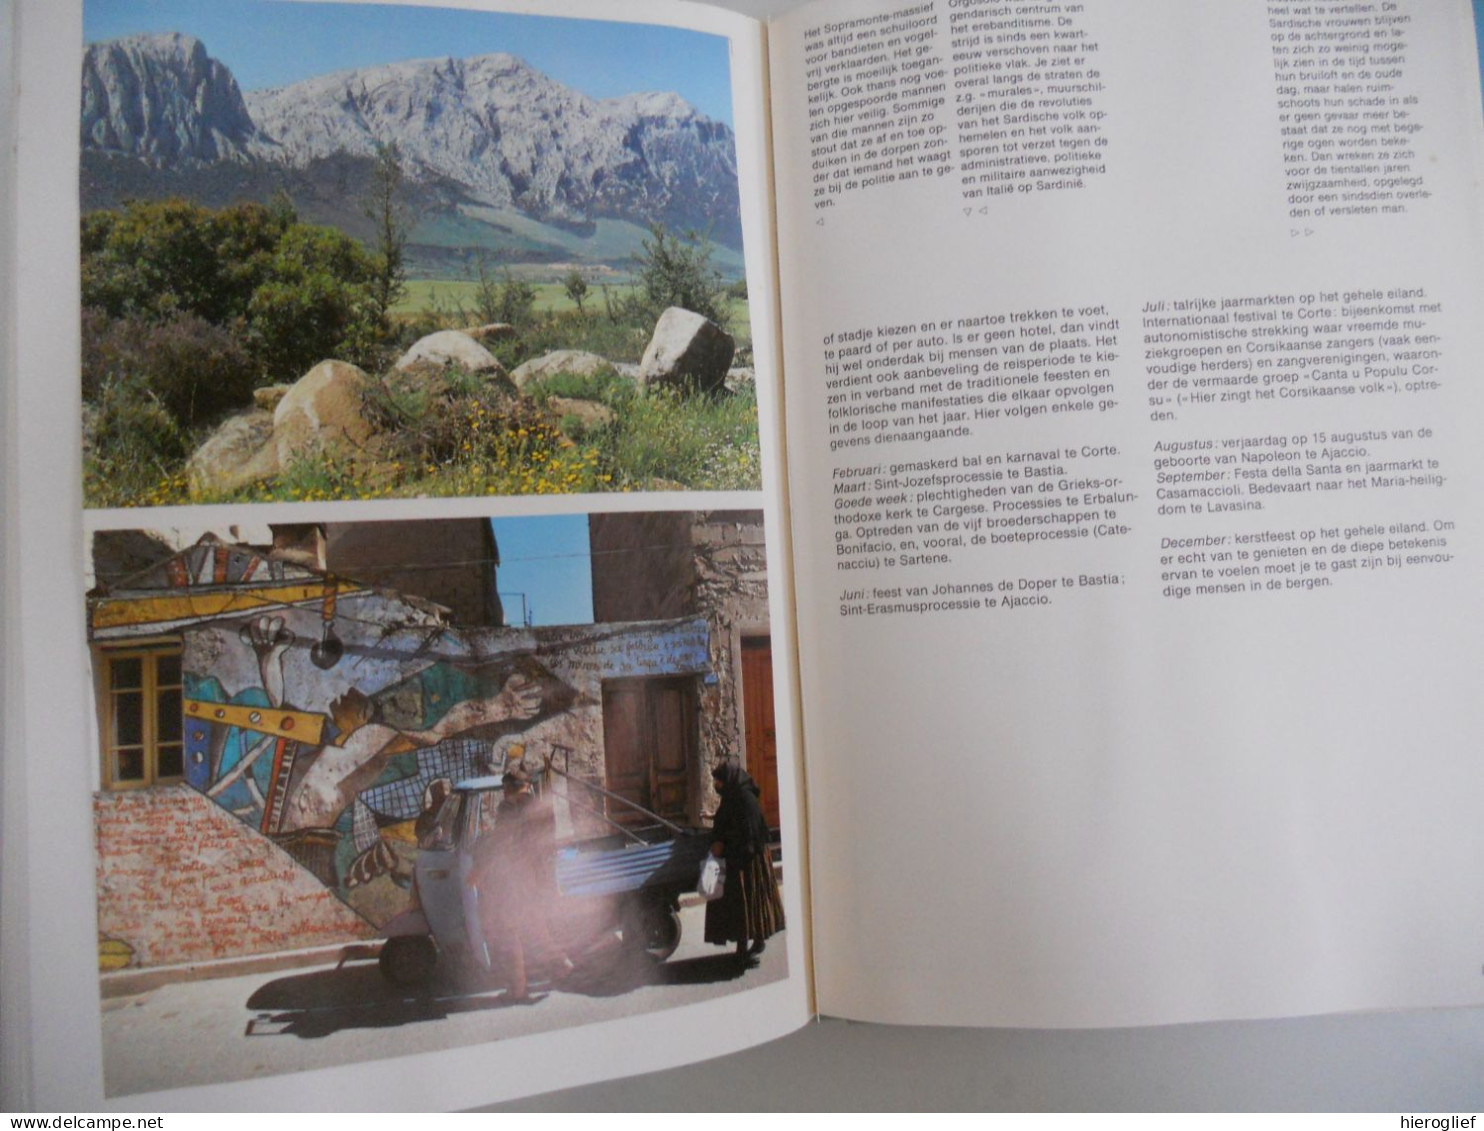 Corsica en Sardinië - Album Artis Historia compleet met alle chromo's Middellandse Zee natuur cultuur architectuur kunst